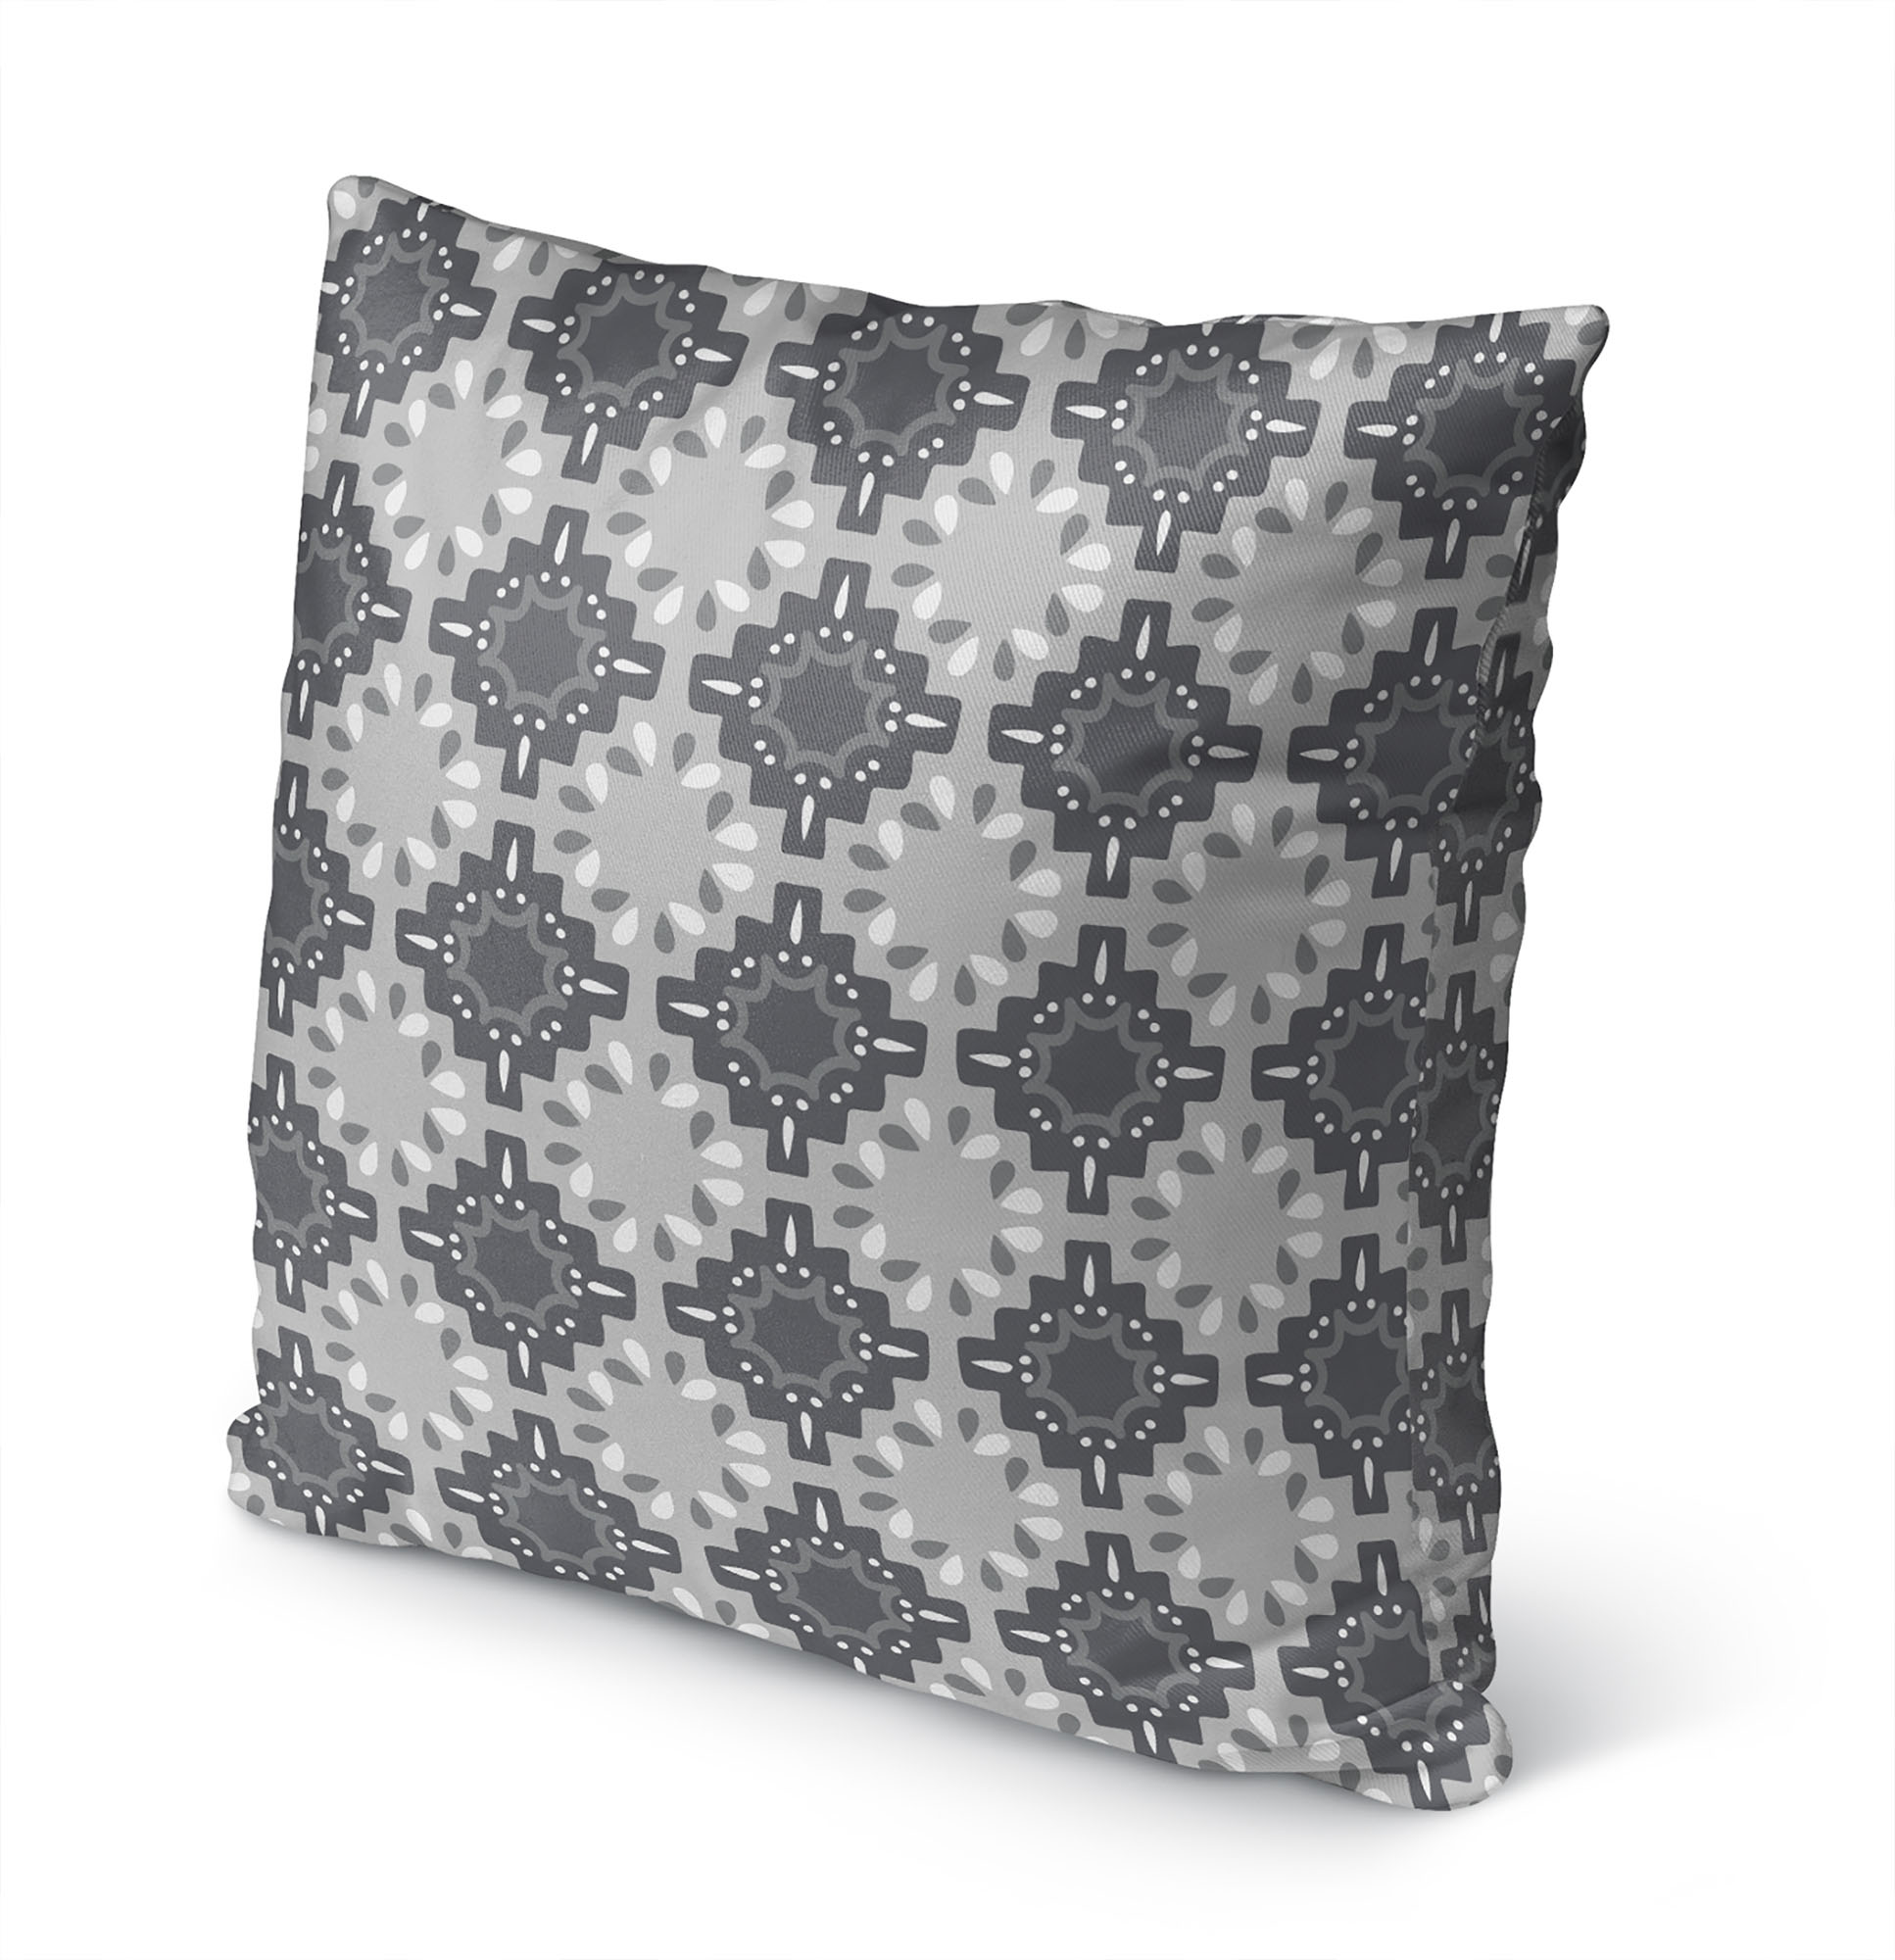 Estrella Stone Outdoor Pillow by Kavka Designs - image 3 of 5